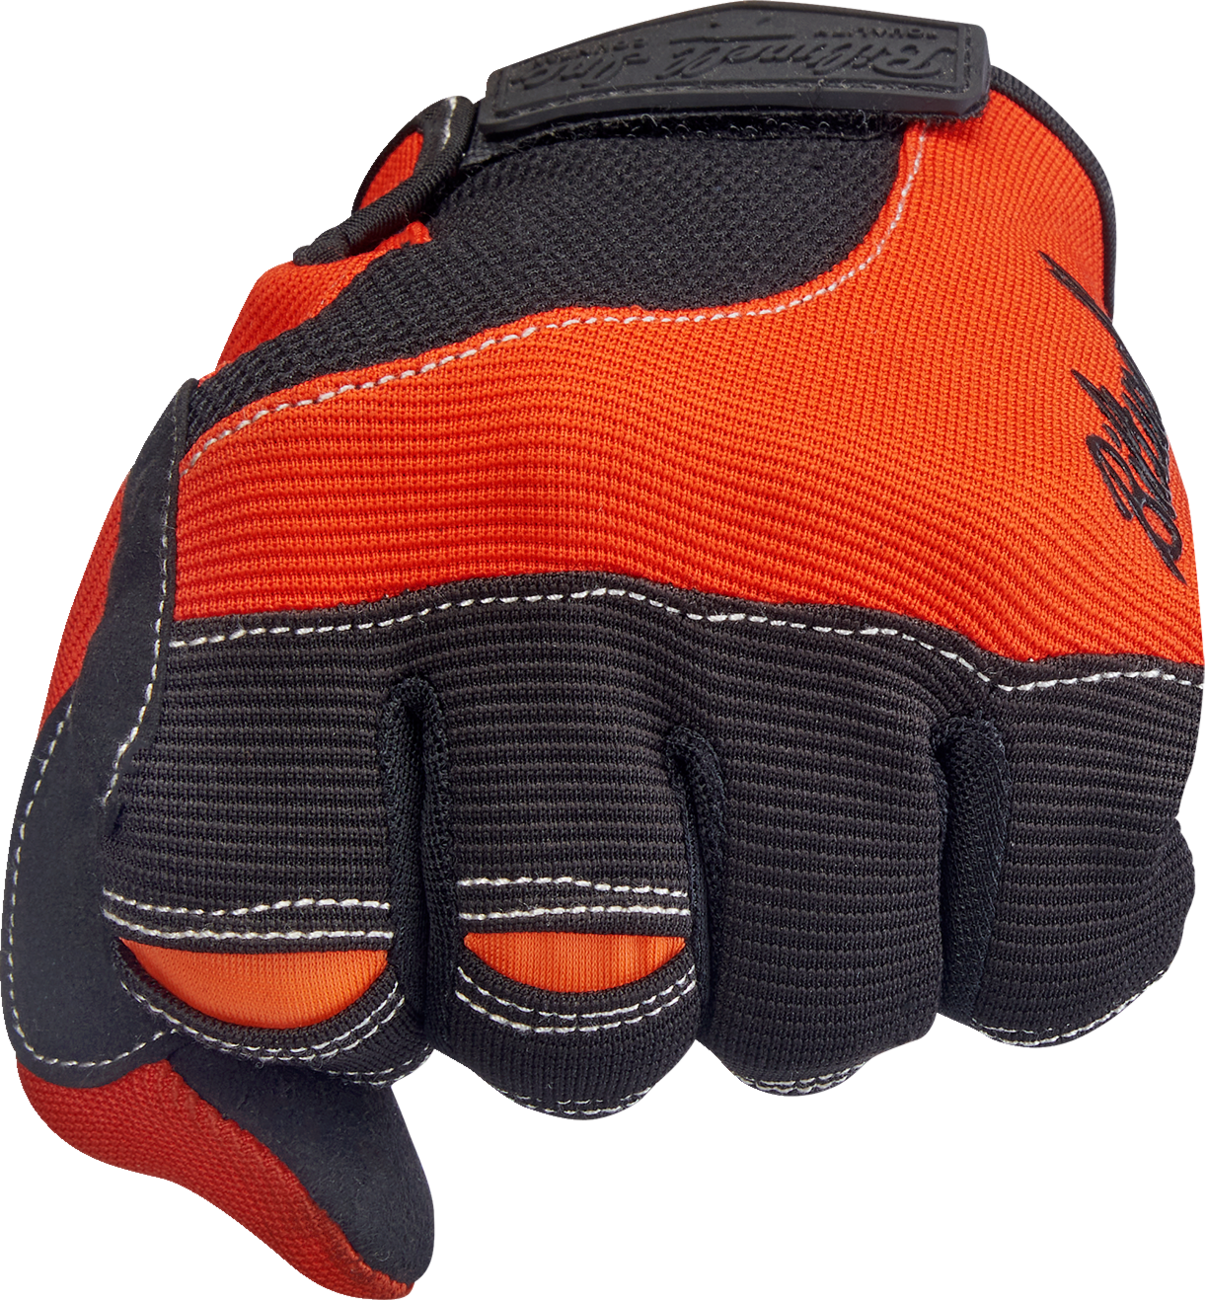 BILTWELL Moto Gloves - Orange/Black - Small 1501-0106-002